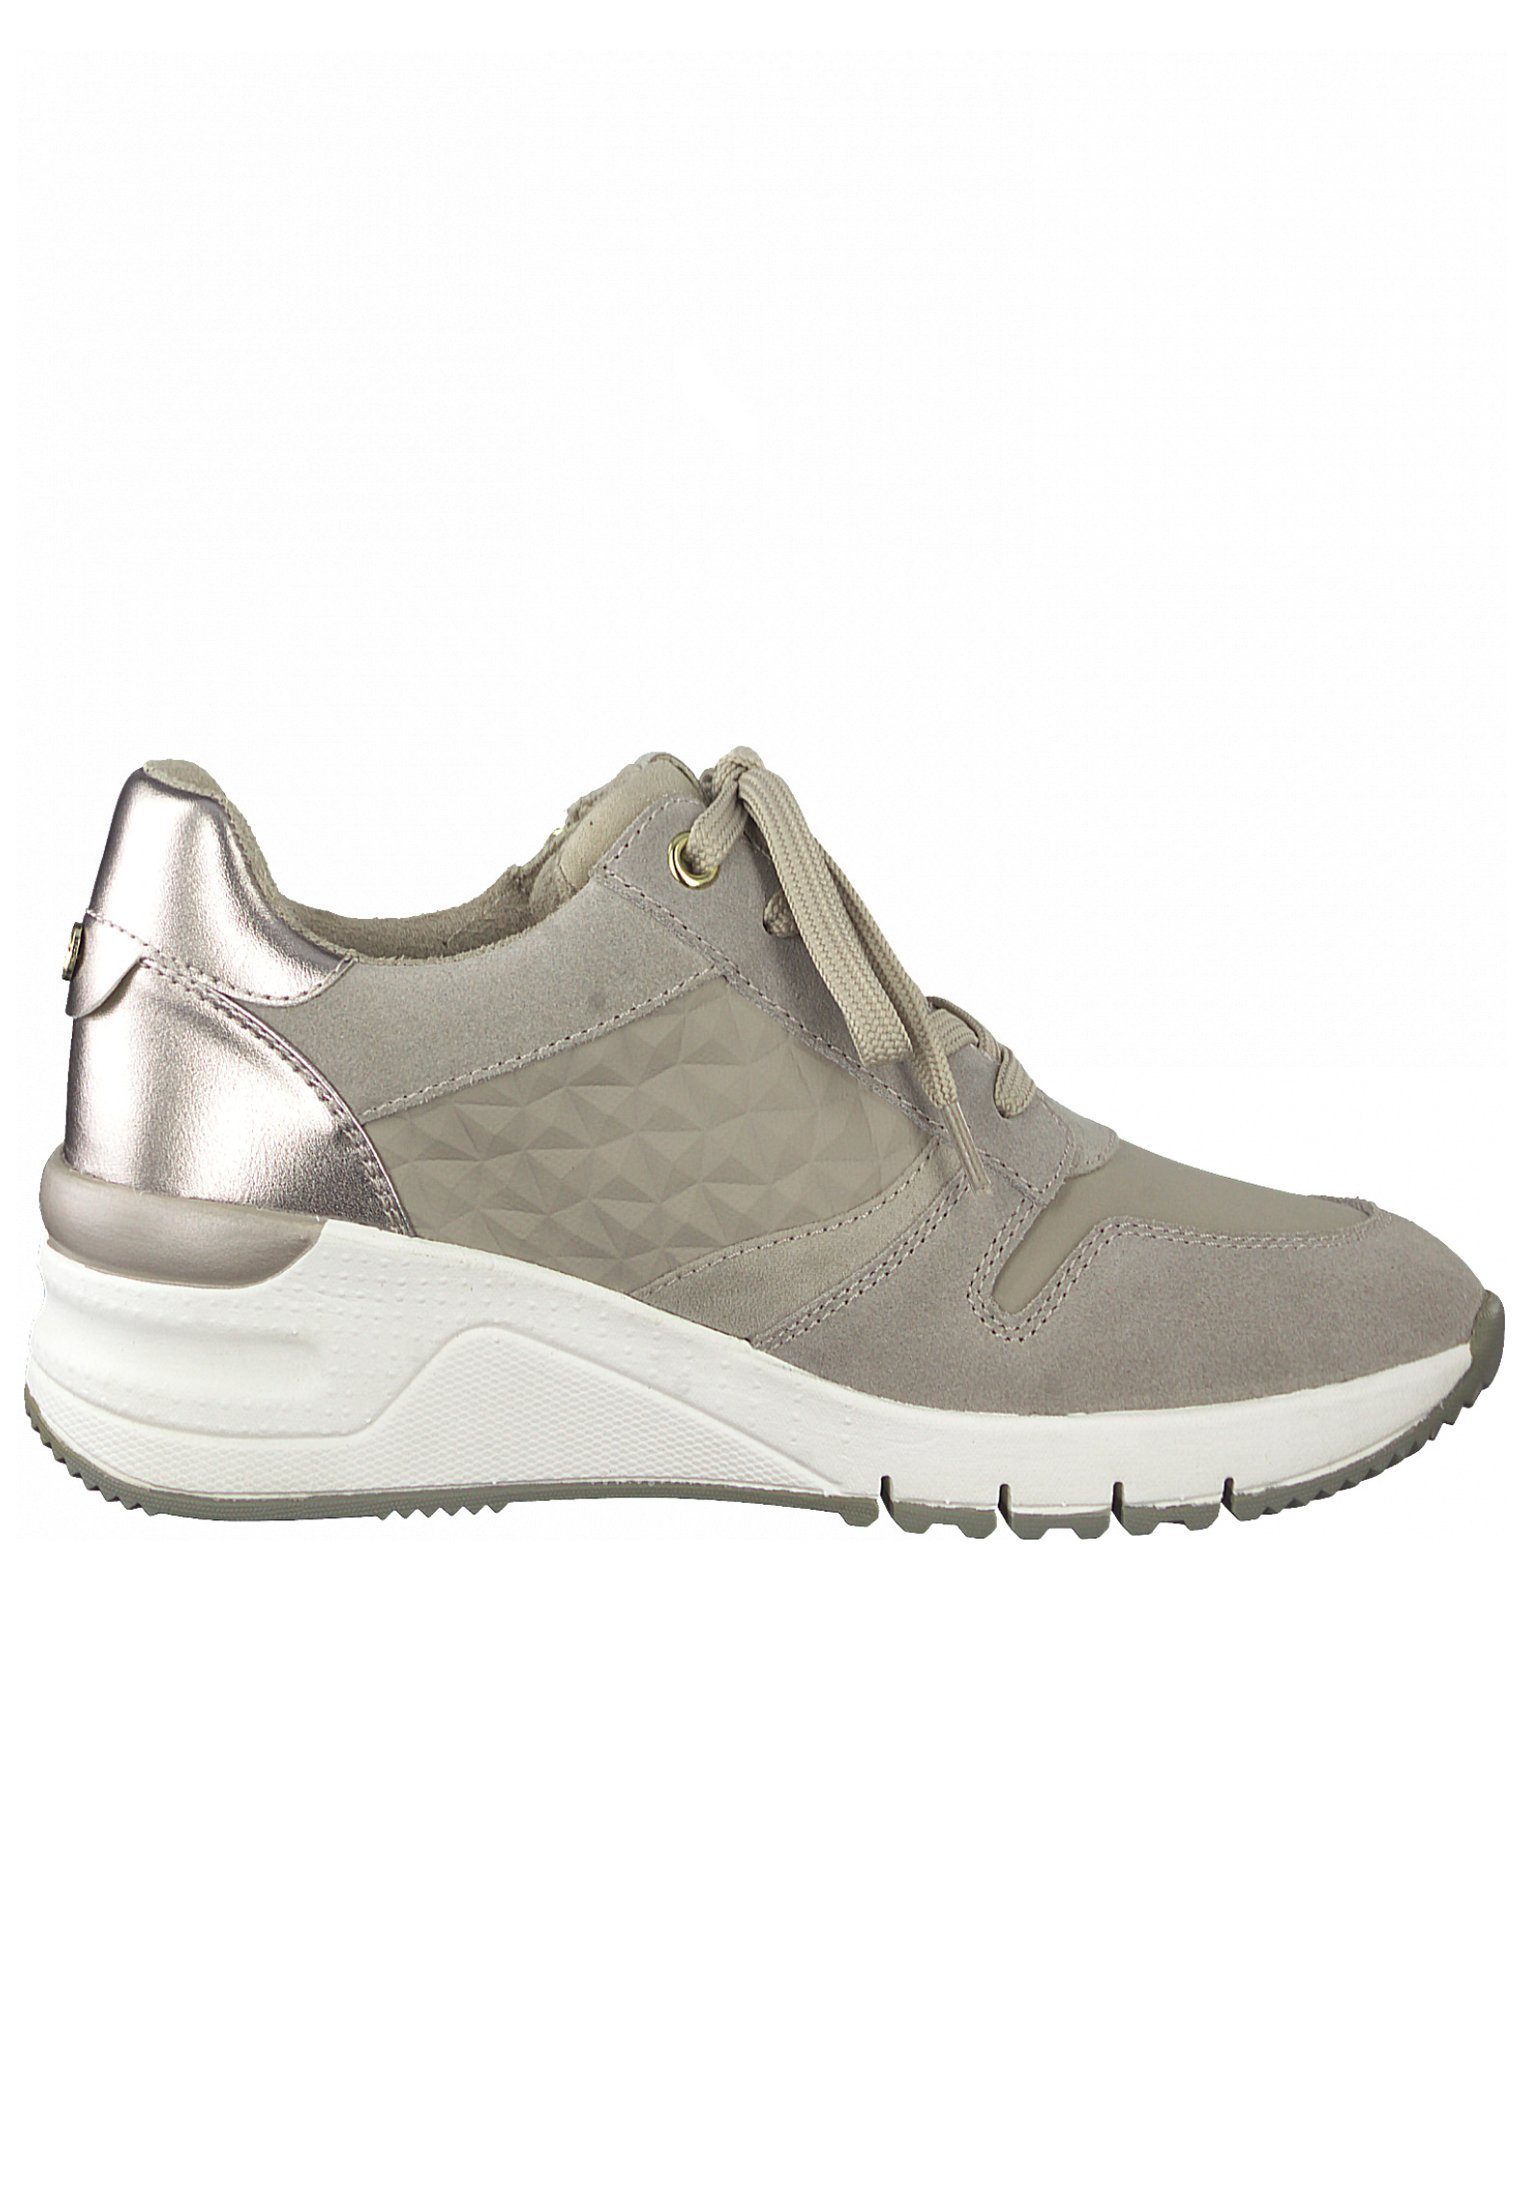 Tamaris 1-23702-28 TAUPE COMB Taupe Sneaker 426 Comb (21203429)